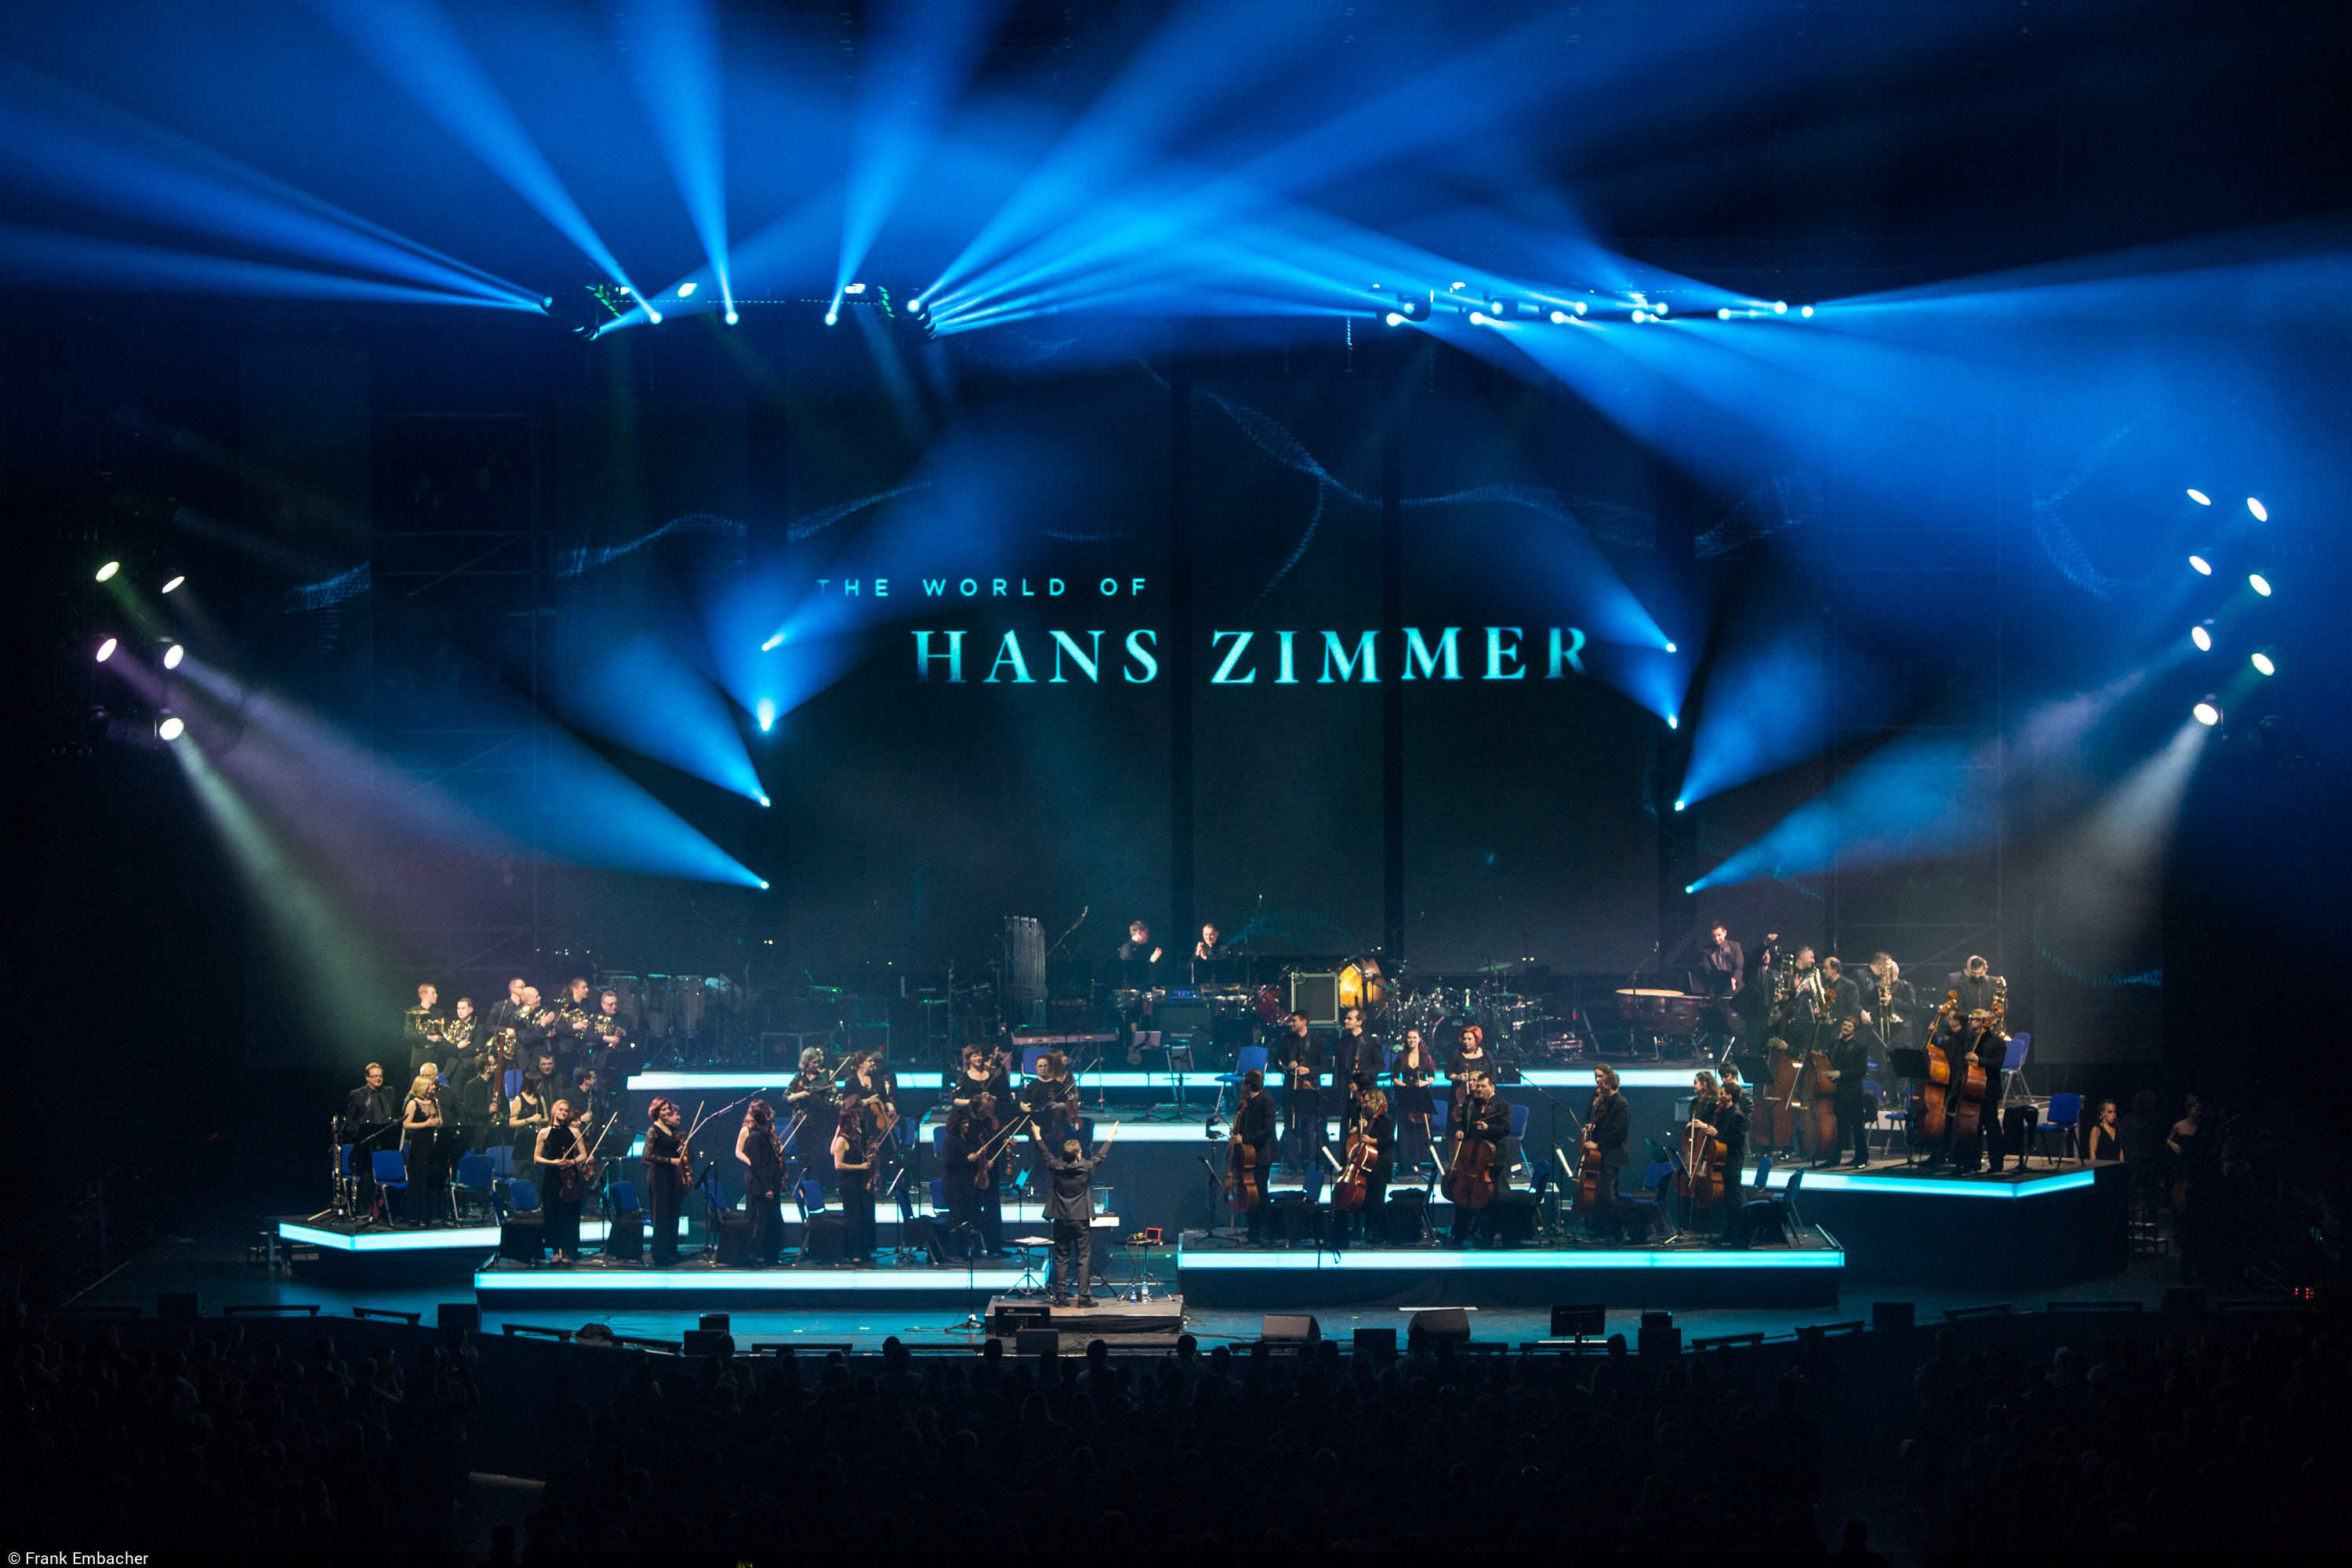 Zimmer orchestra. Hanz концерт Hans Zimmer. Концерт Ханса ЦИМЕРМАНА. Ханс Циммер концерт в Москве. Hans Zimmer’s Universe концерт.